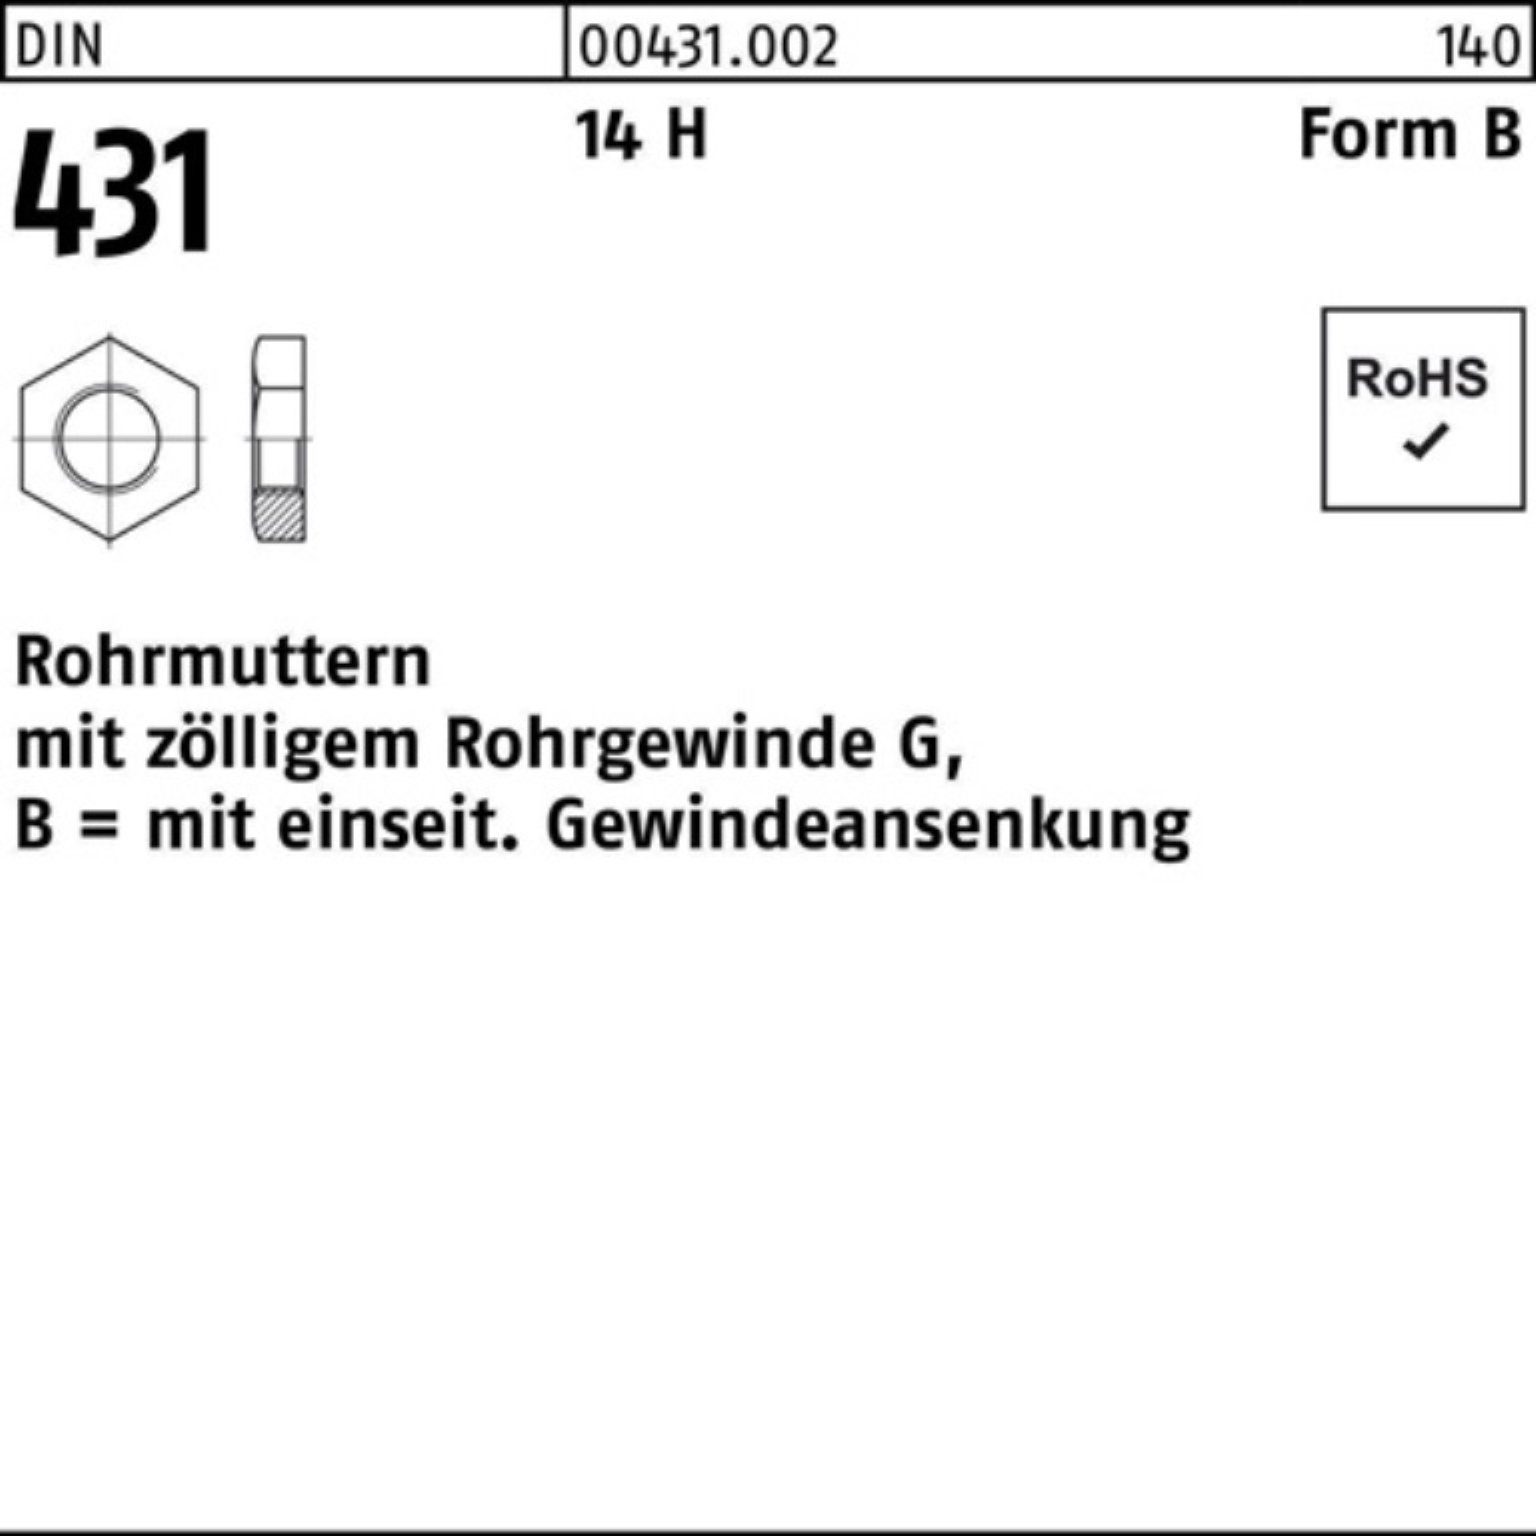 1/4 1 DIN DIN Rohrmutter Stück 14 431 Form H Reyher Rohrmutter BG H 100er 14 Pack 431 1